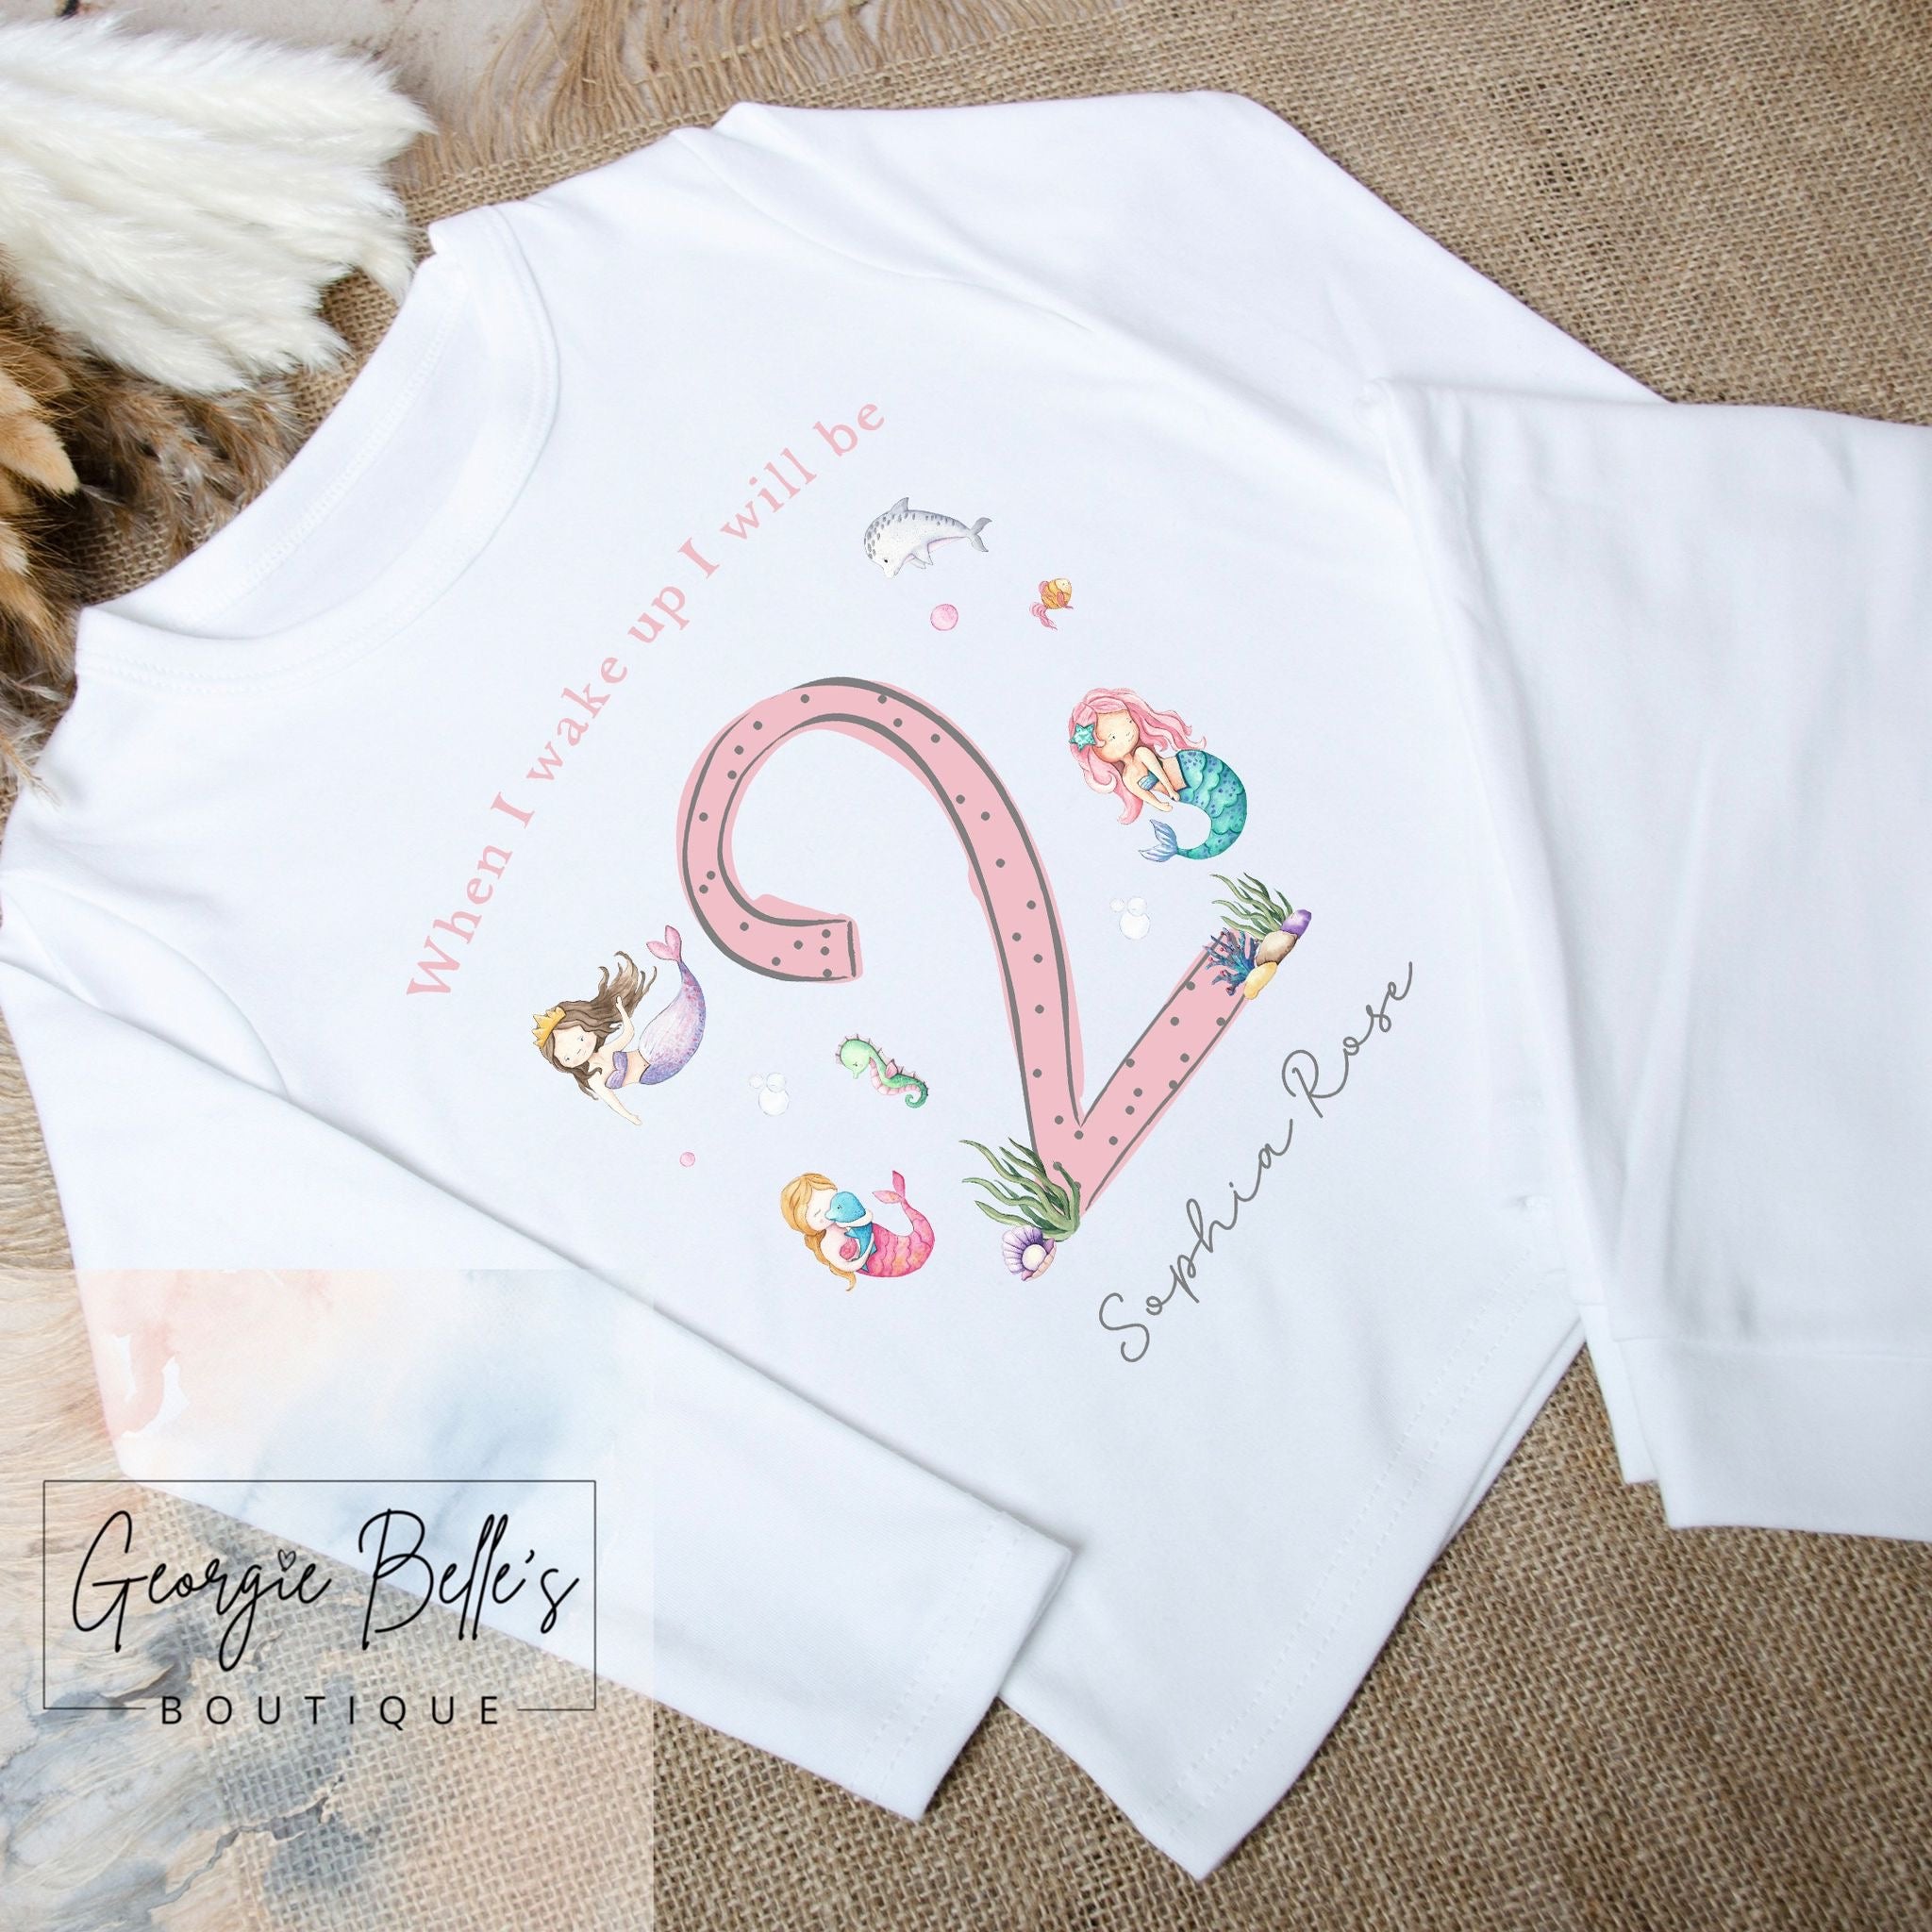 Personalised Birthday White Pyjamas - Pink Mermaid Design